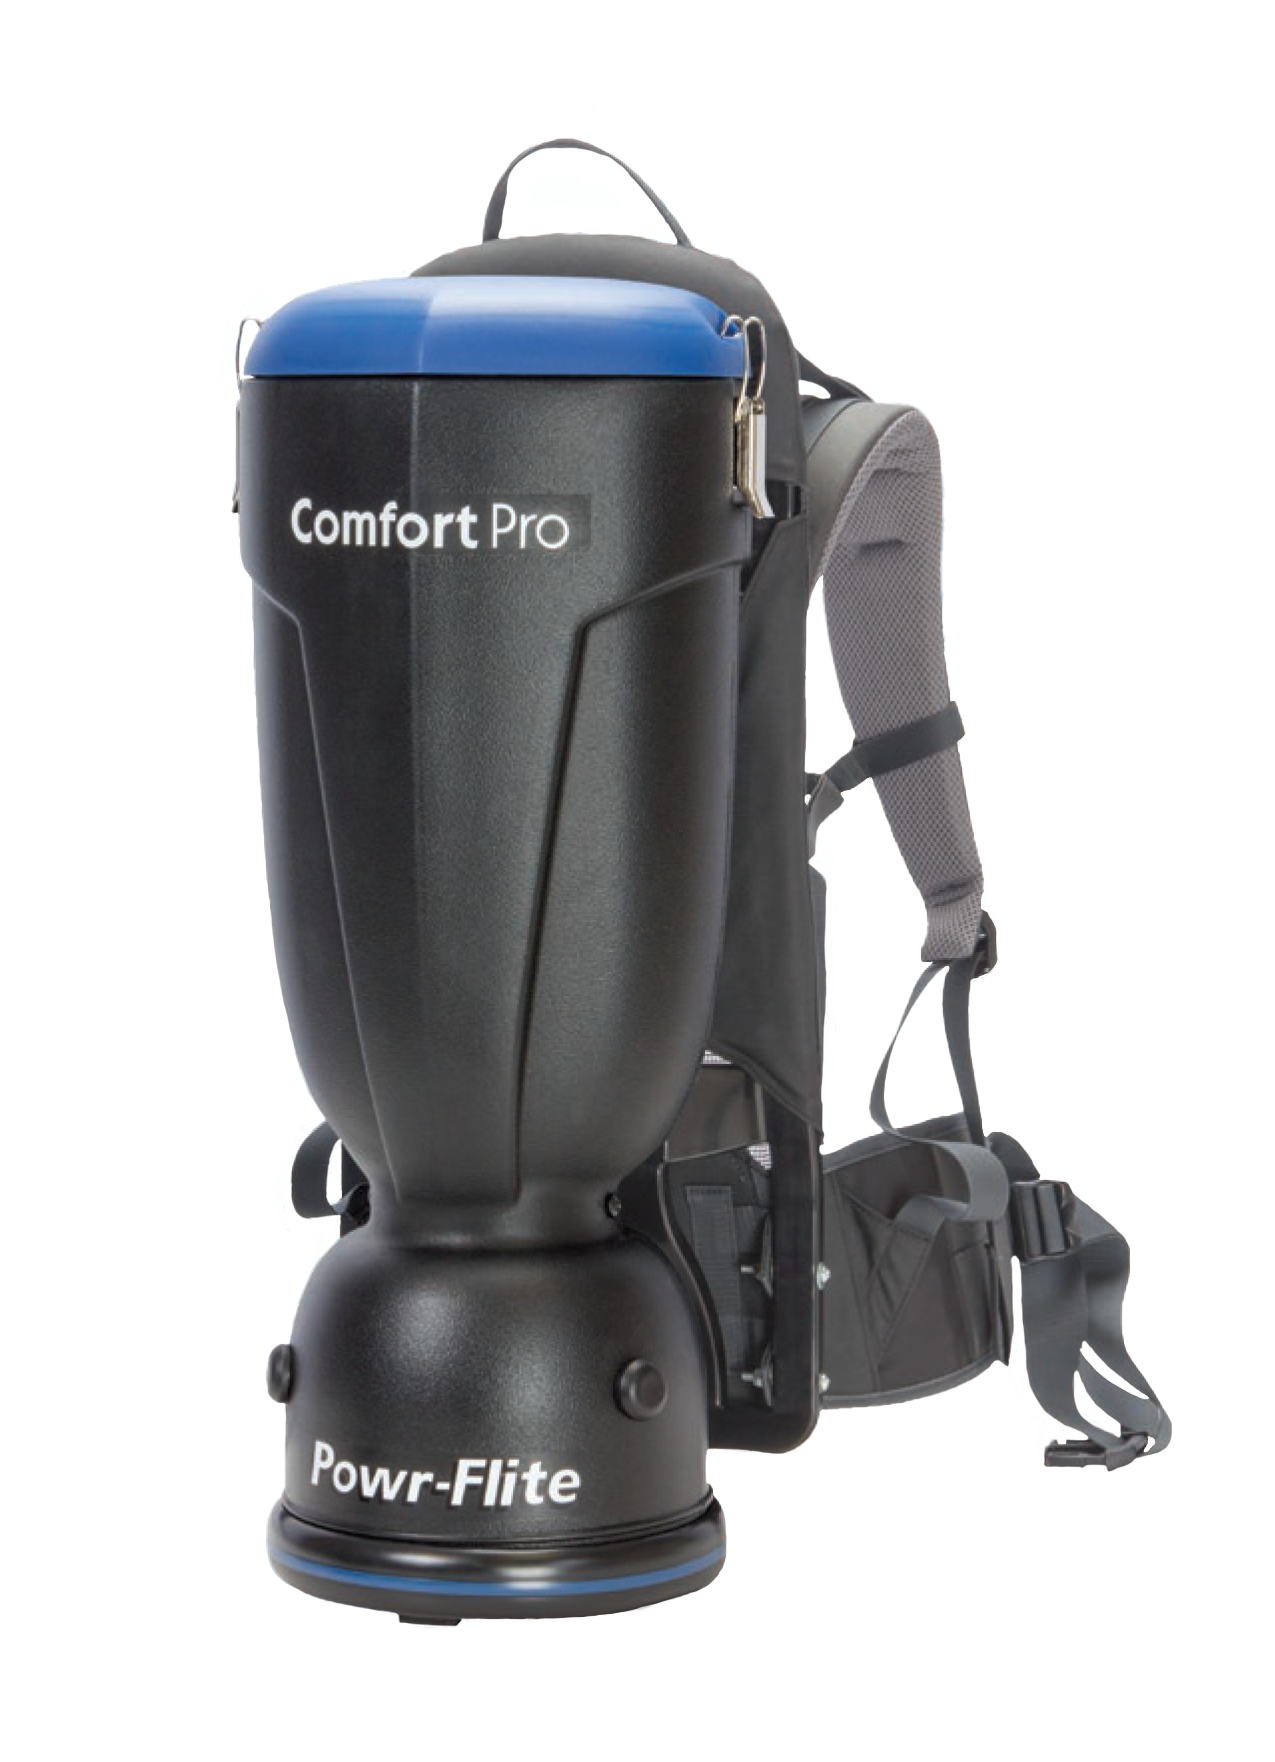 Powr-Flite Comfort Pro Backpack Vacuum